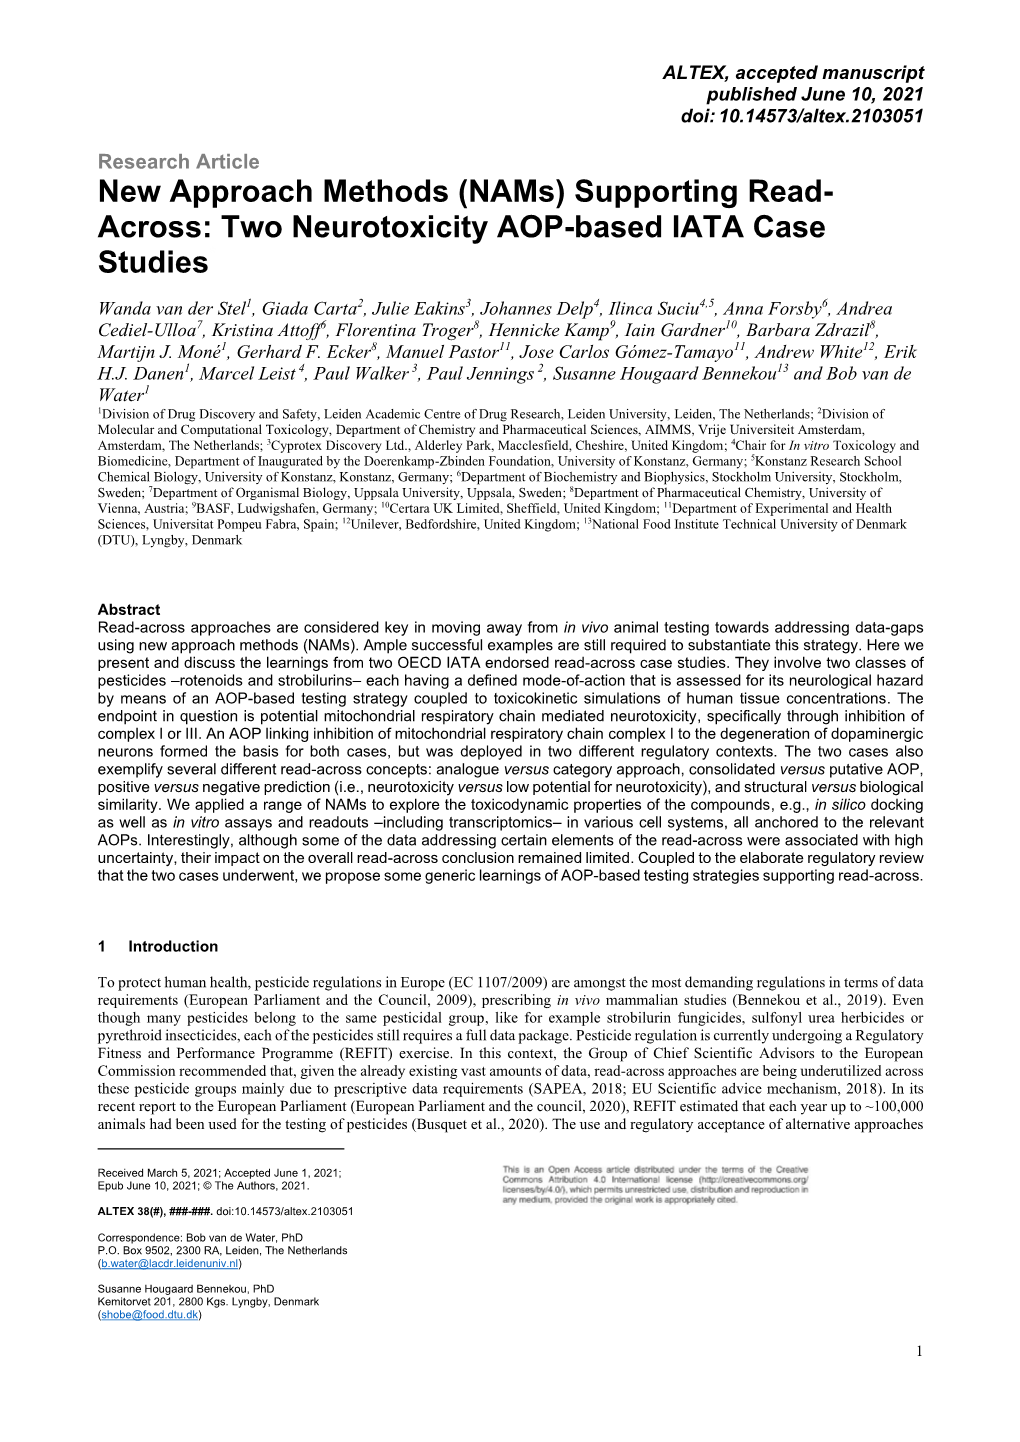 Across: Two Neurotoxicity AOP-Based IATA Case Studies*